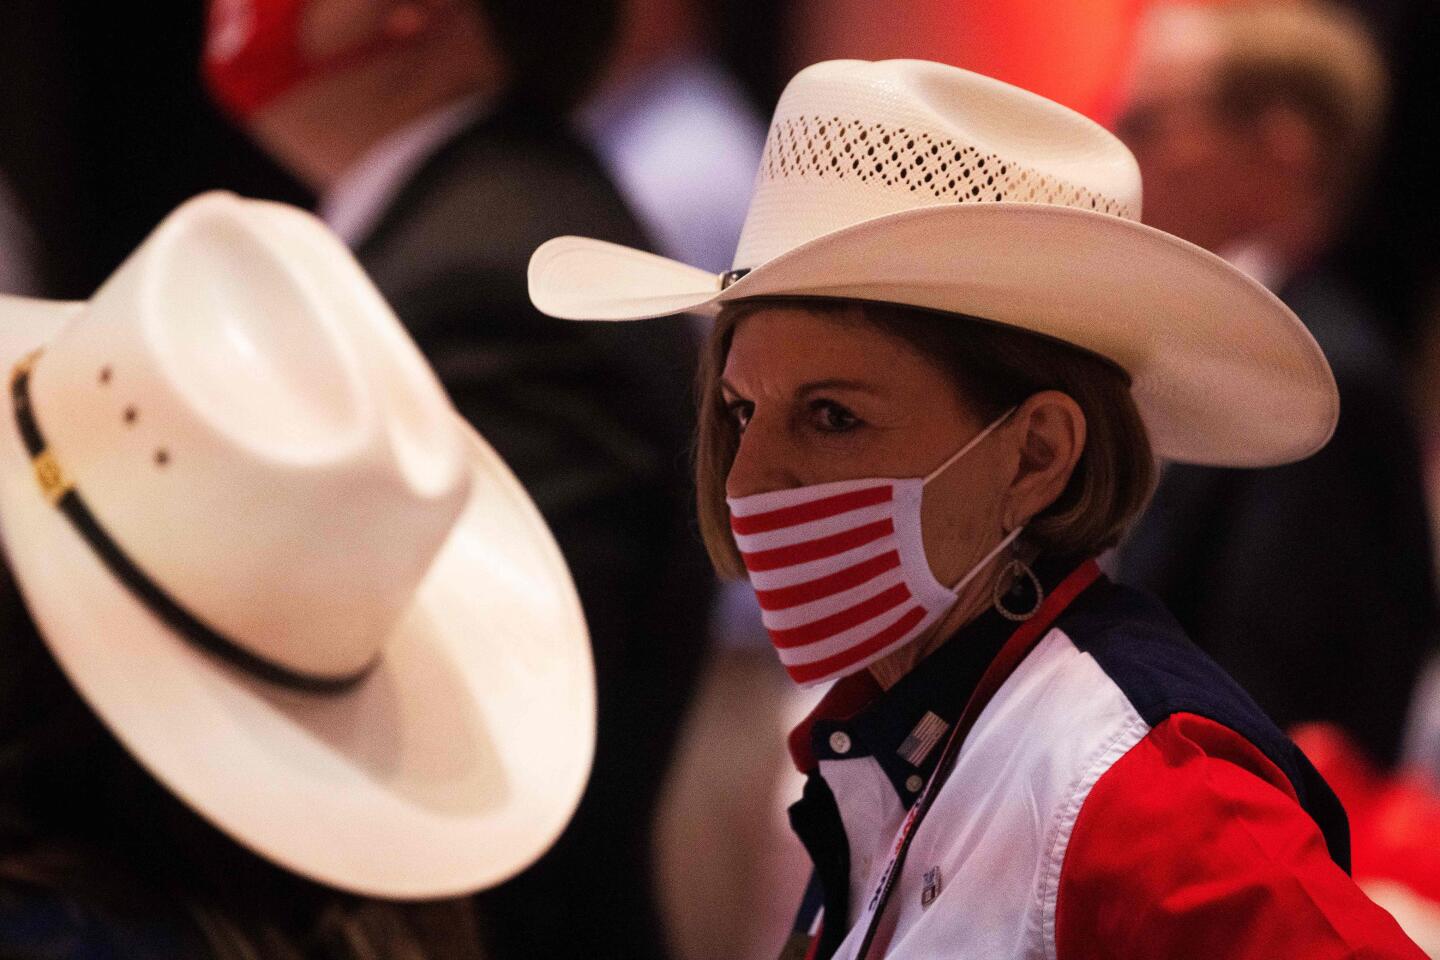 Delegates in cowboy hats